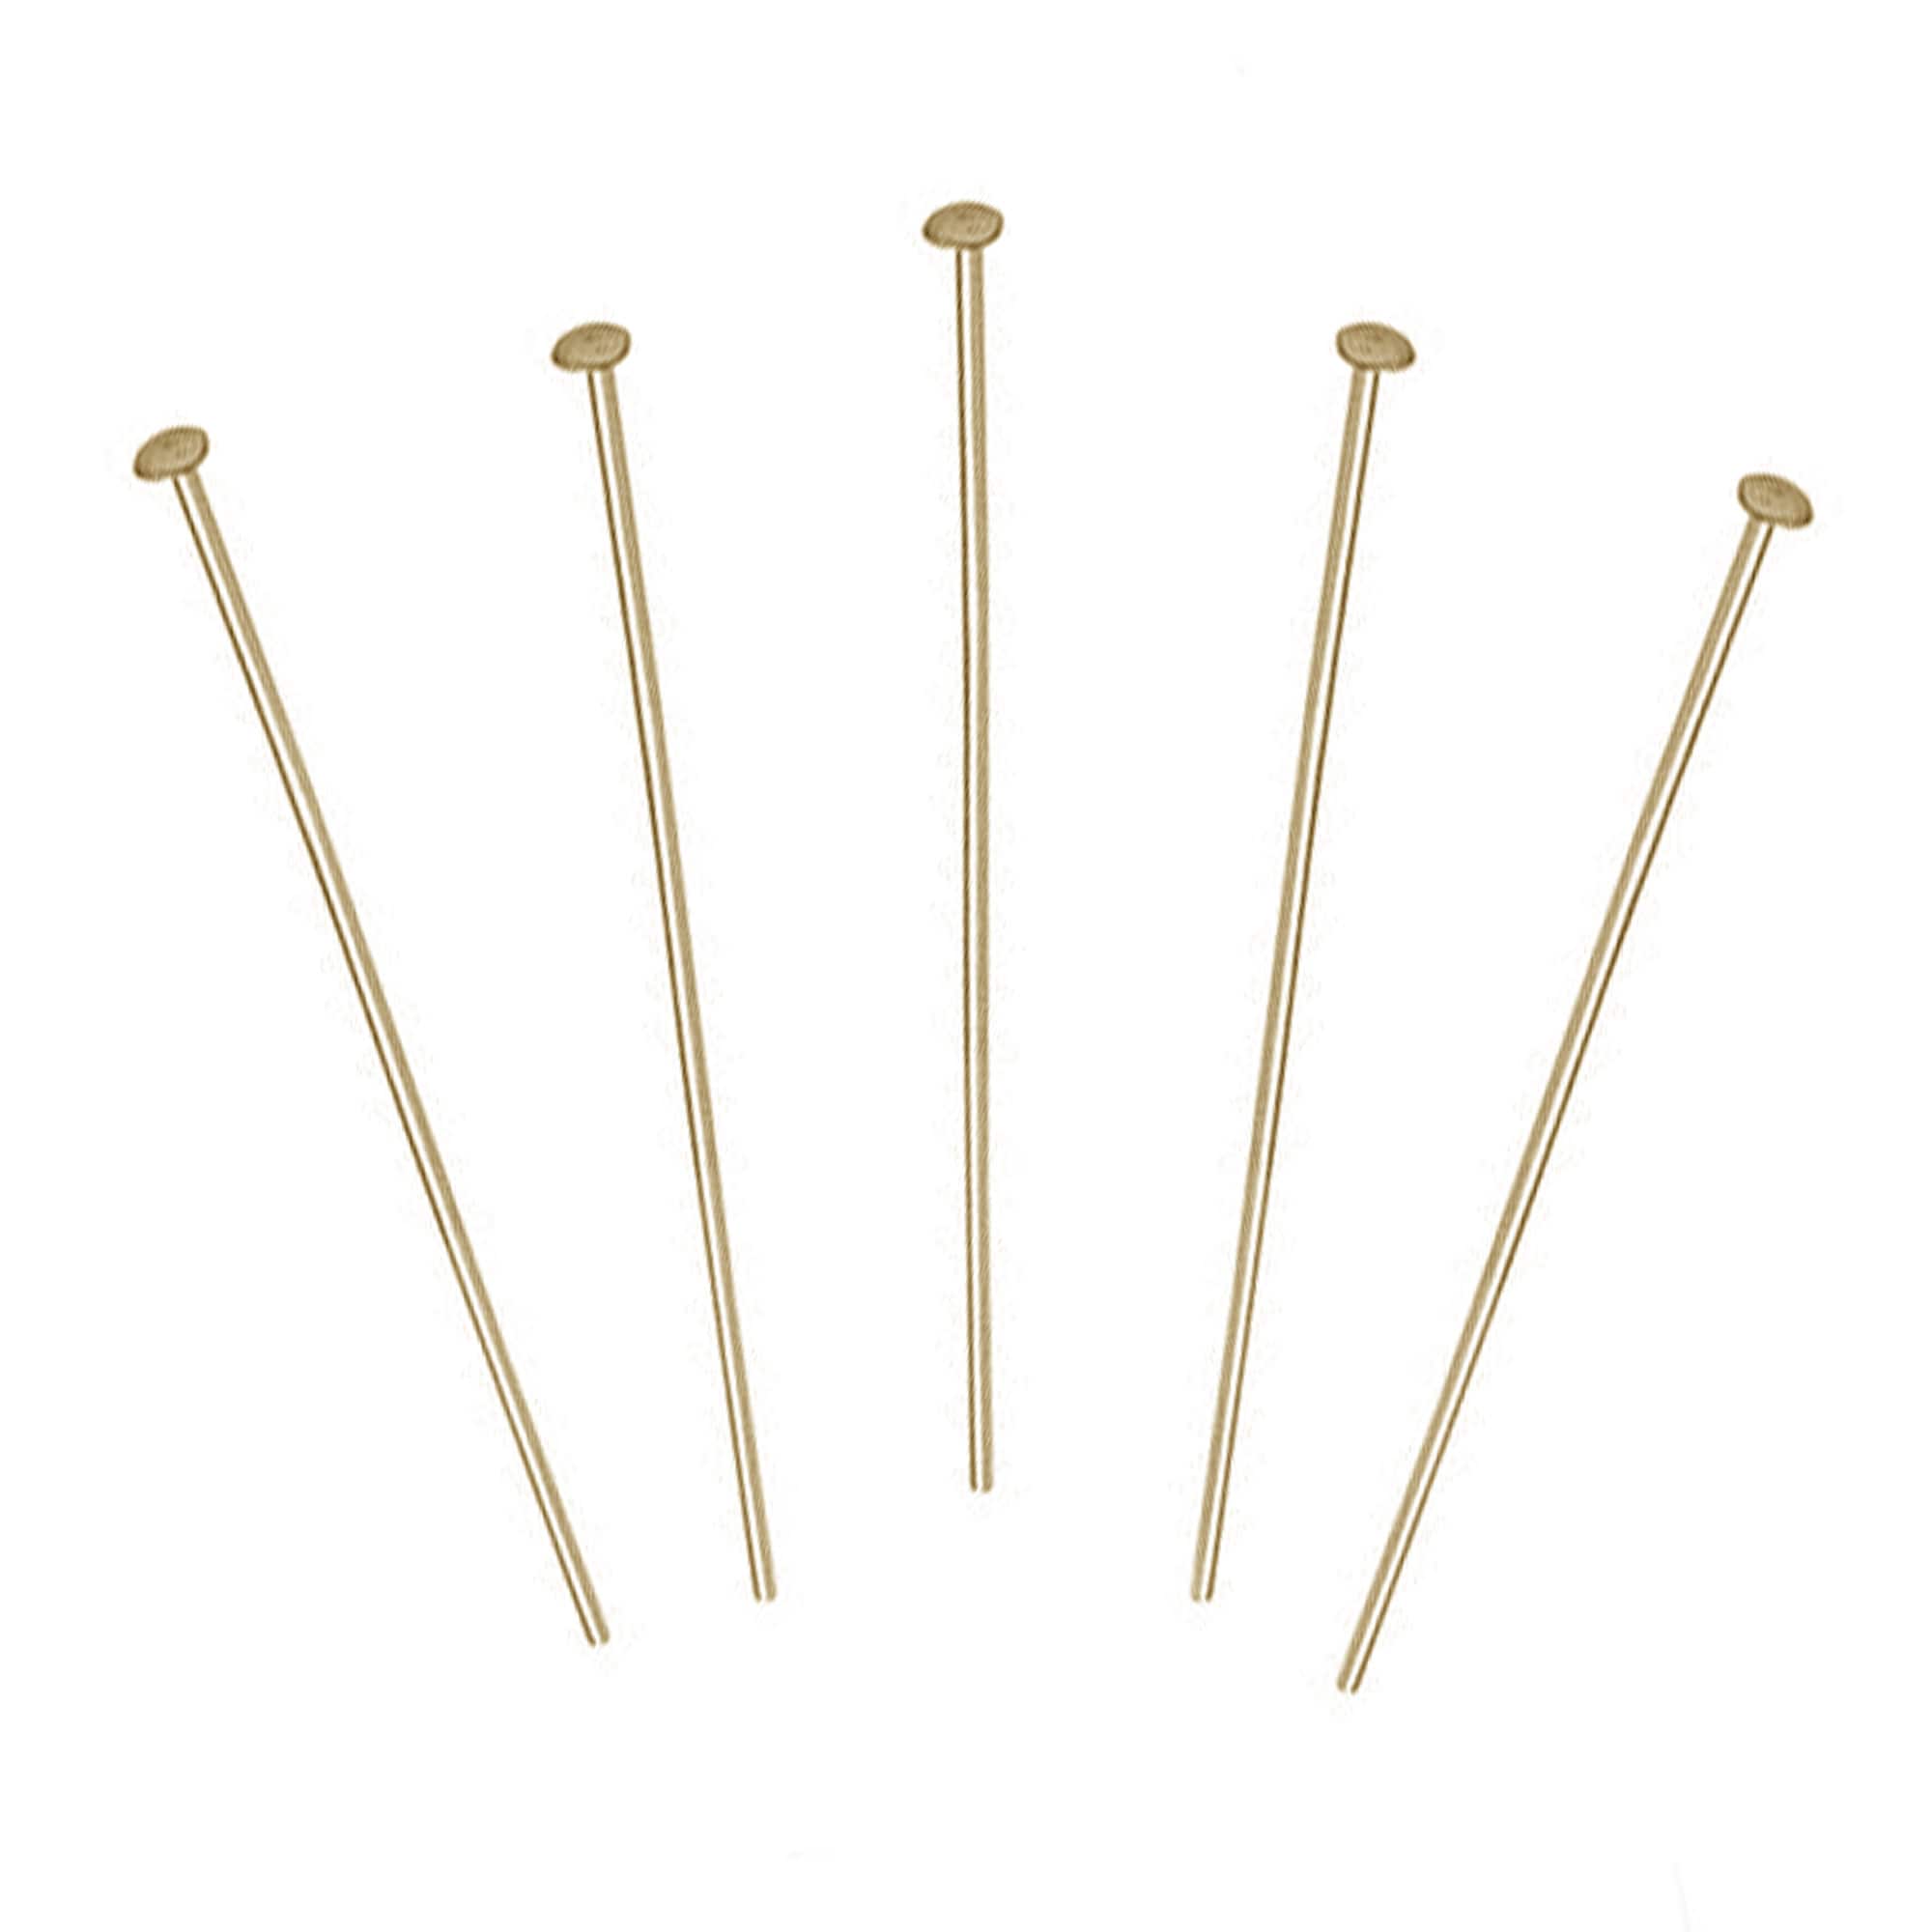 50pcs 14K Gold Filled Head Pins Flat Head, Nail Head Pin, 0.4mm, 26 Gauge,  Earrings Supplies, Gold Filled Jewelry, Headpins, GF Supplies